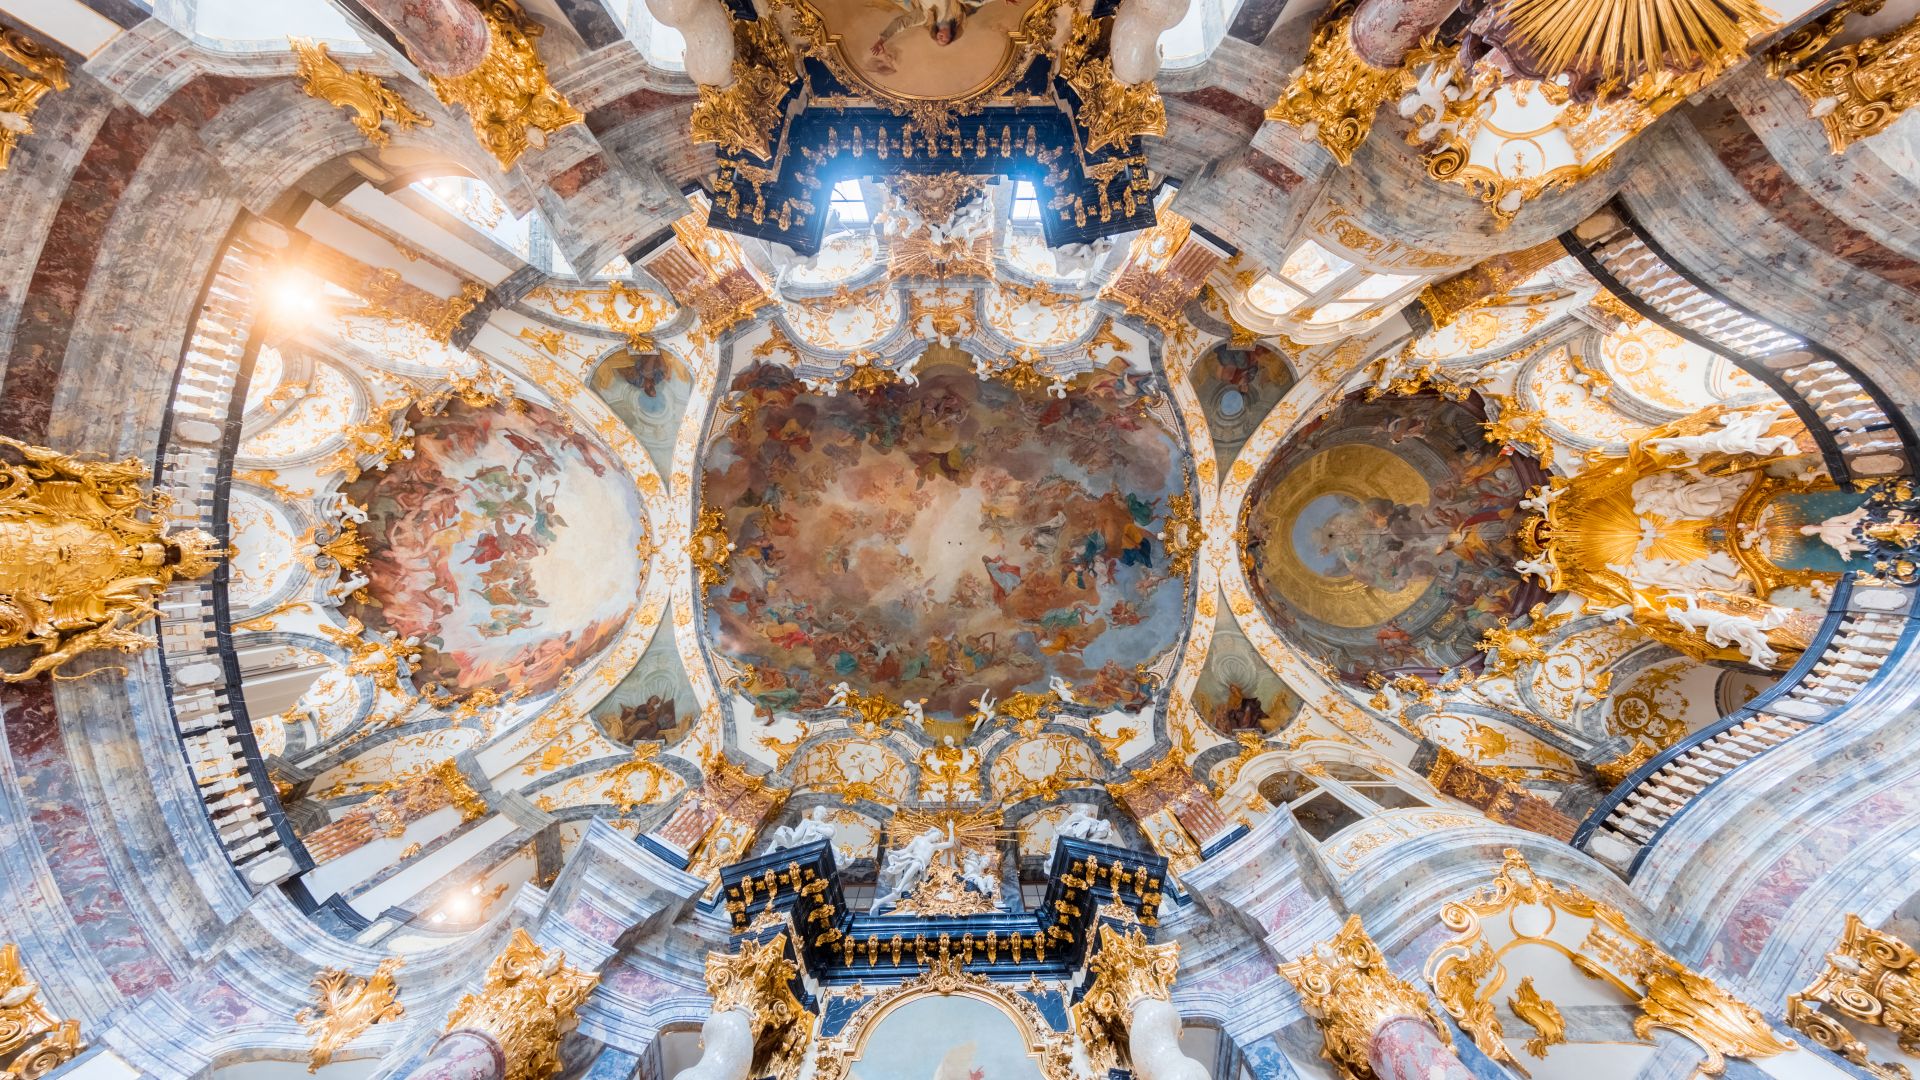 Fiefs de l'architecture baroque - Germany Travel